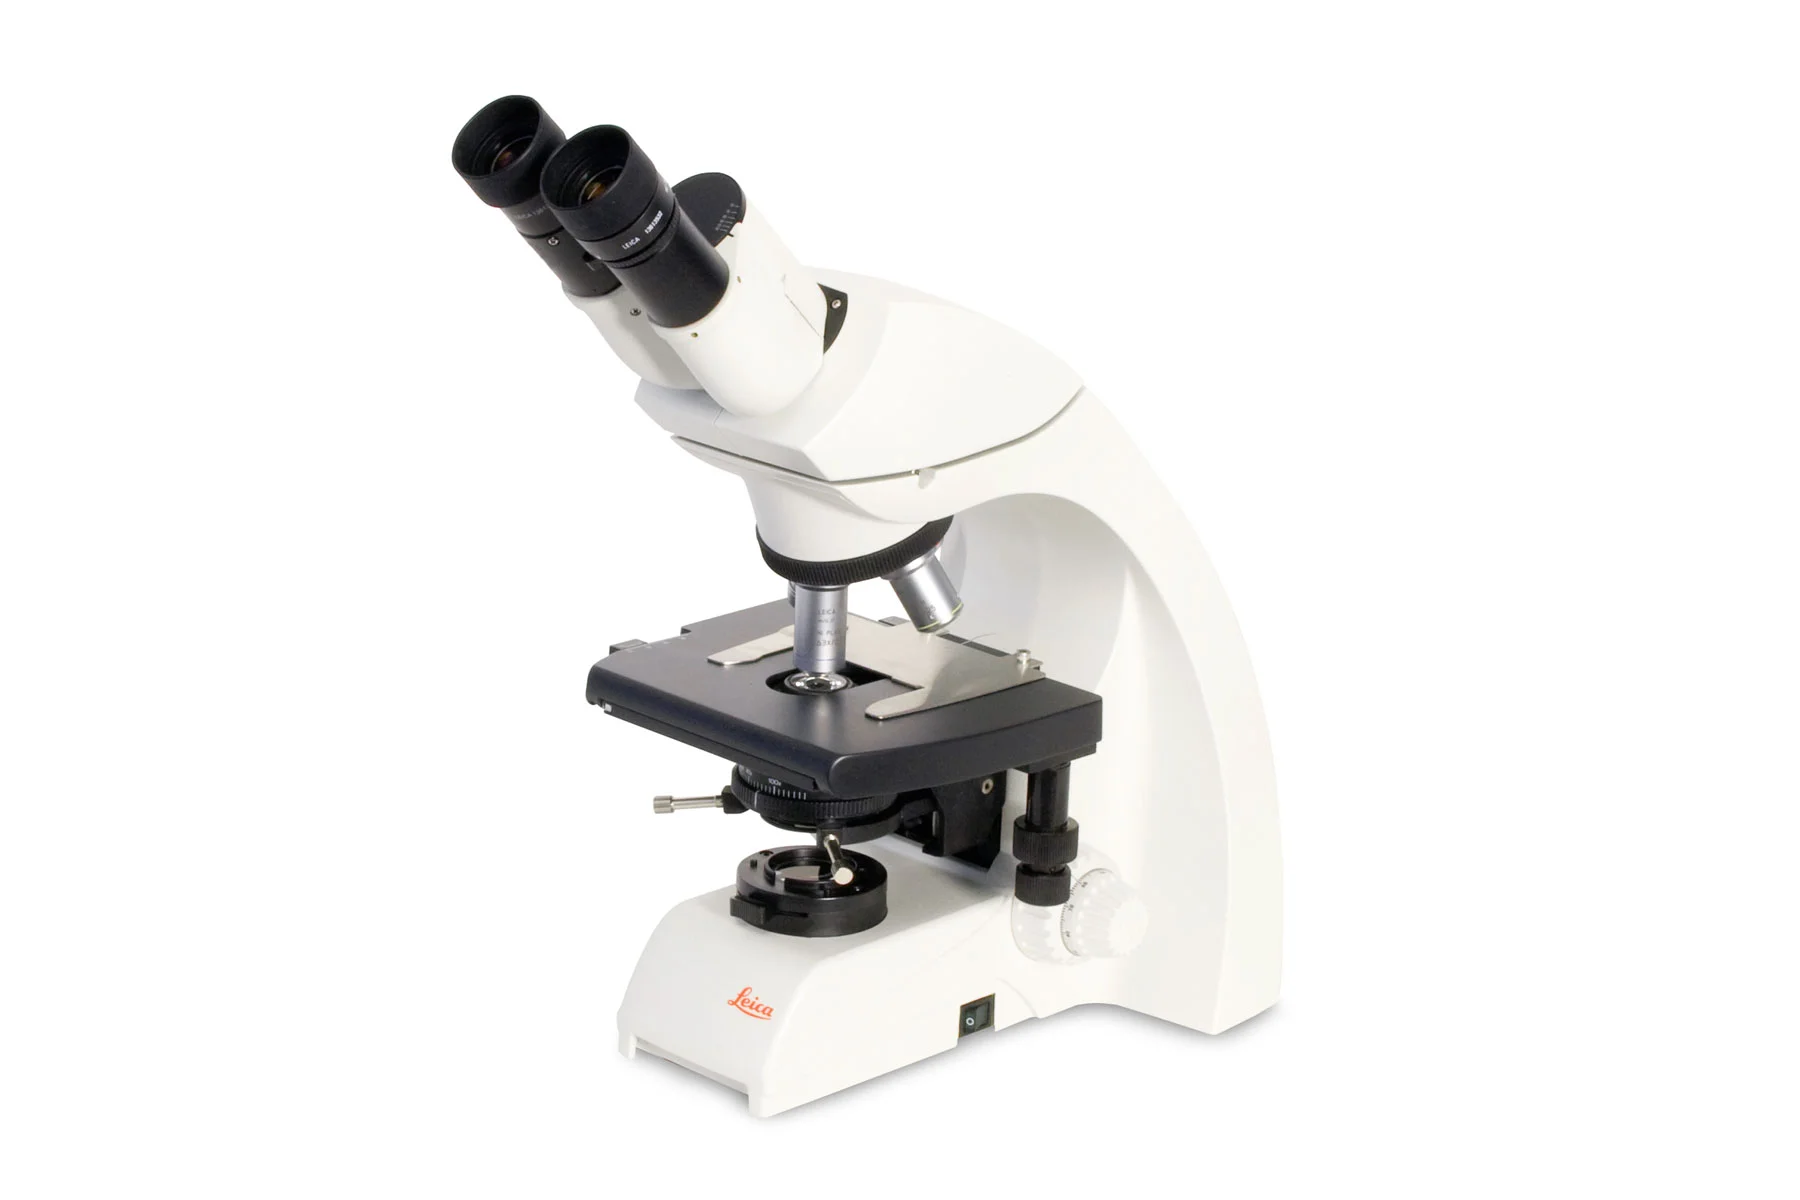 Leica DM750 Educational Microscope, Koehler Illumination and Premium Optics